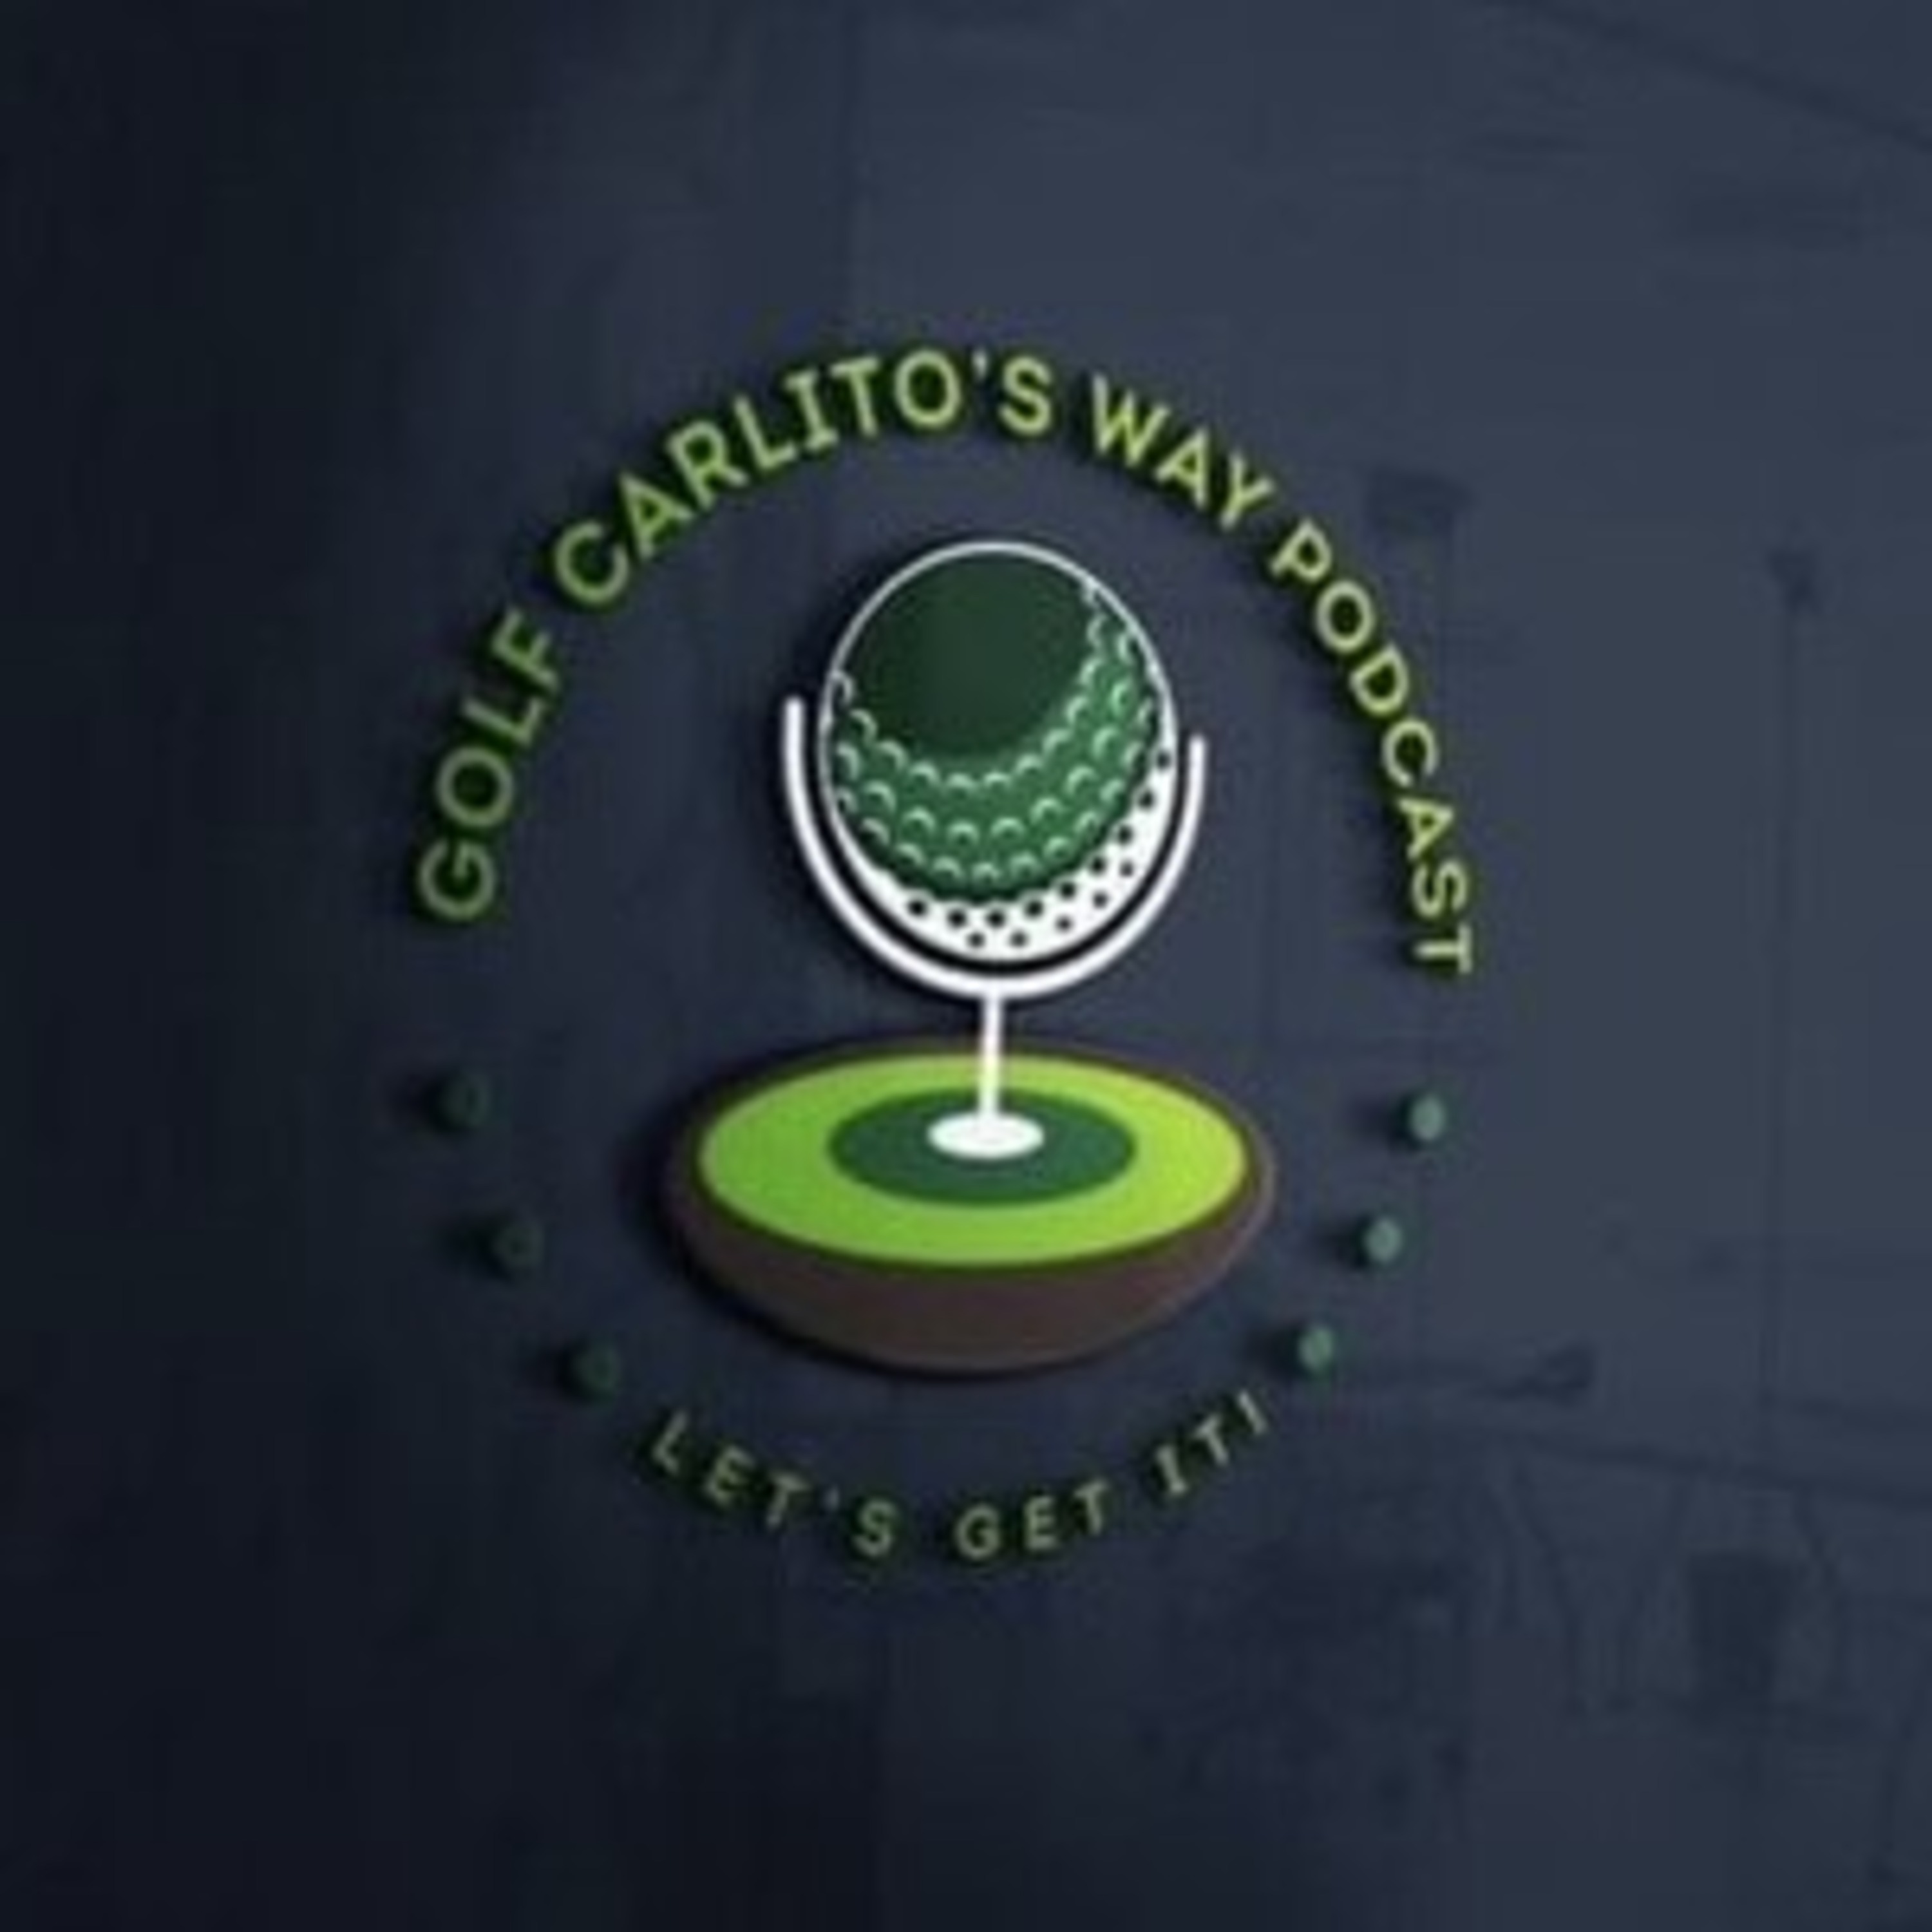 The Carlito's Way Golf Podcast